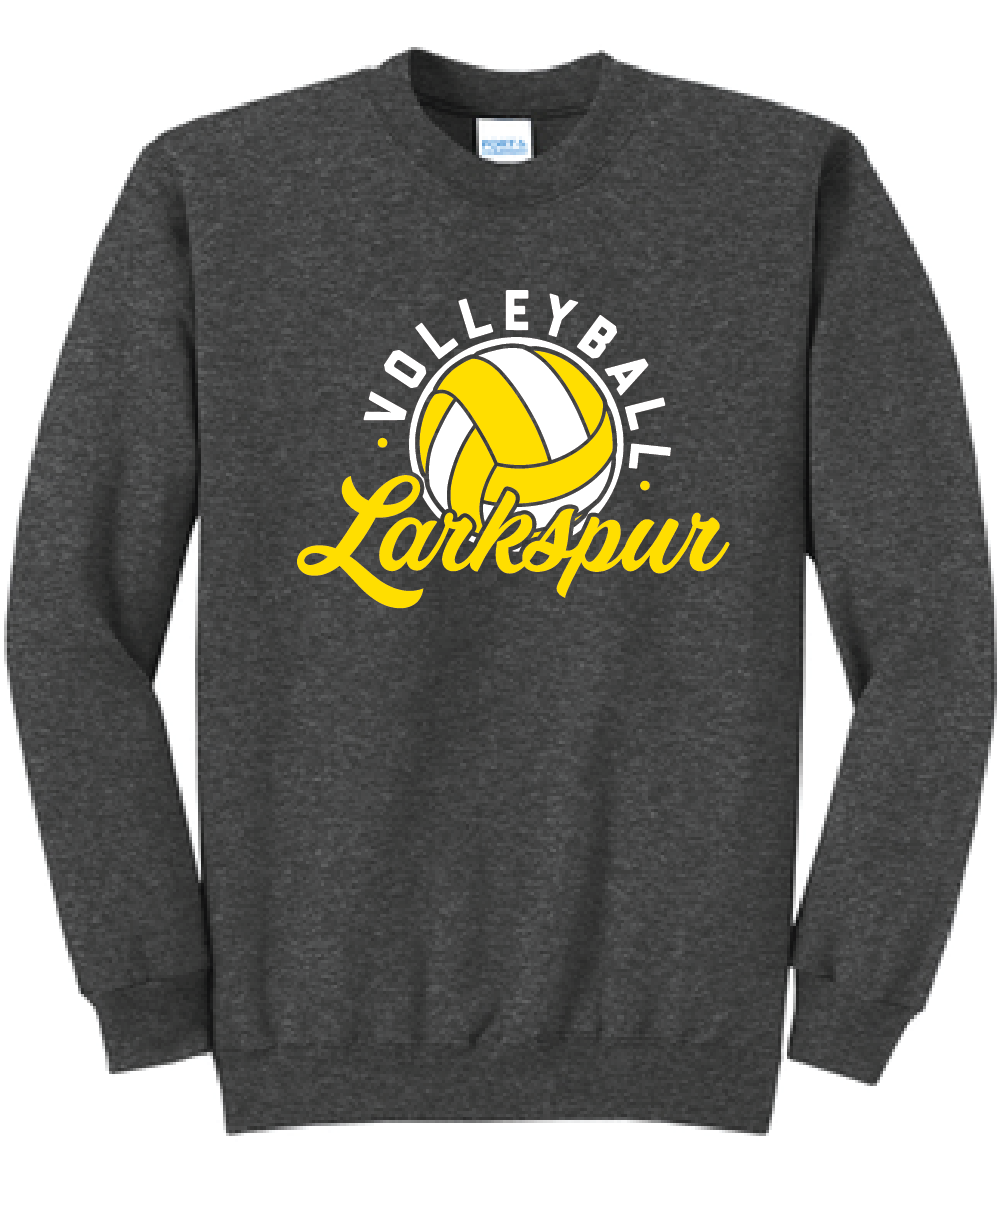 Fleece Crewneck Sweatshirt / White / Larkspur Middle School Volleyball